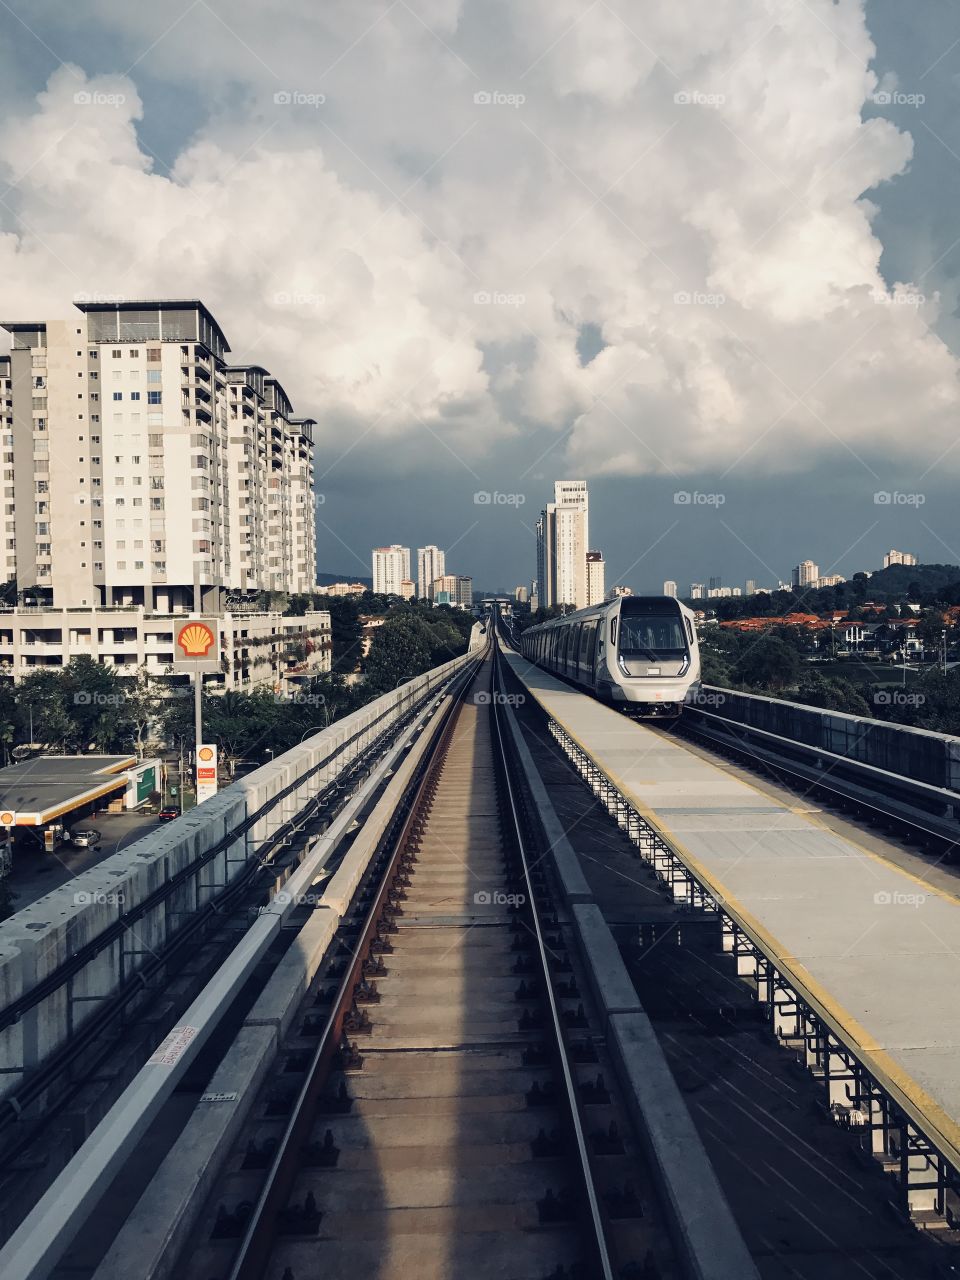 Mass Rapid Transit (MRT) in Malaysia.